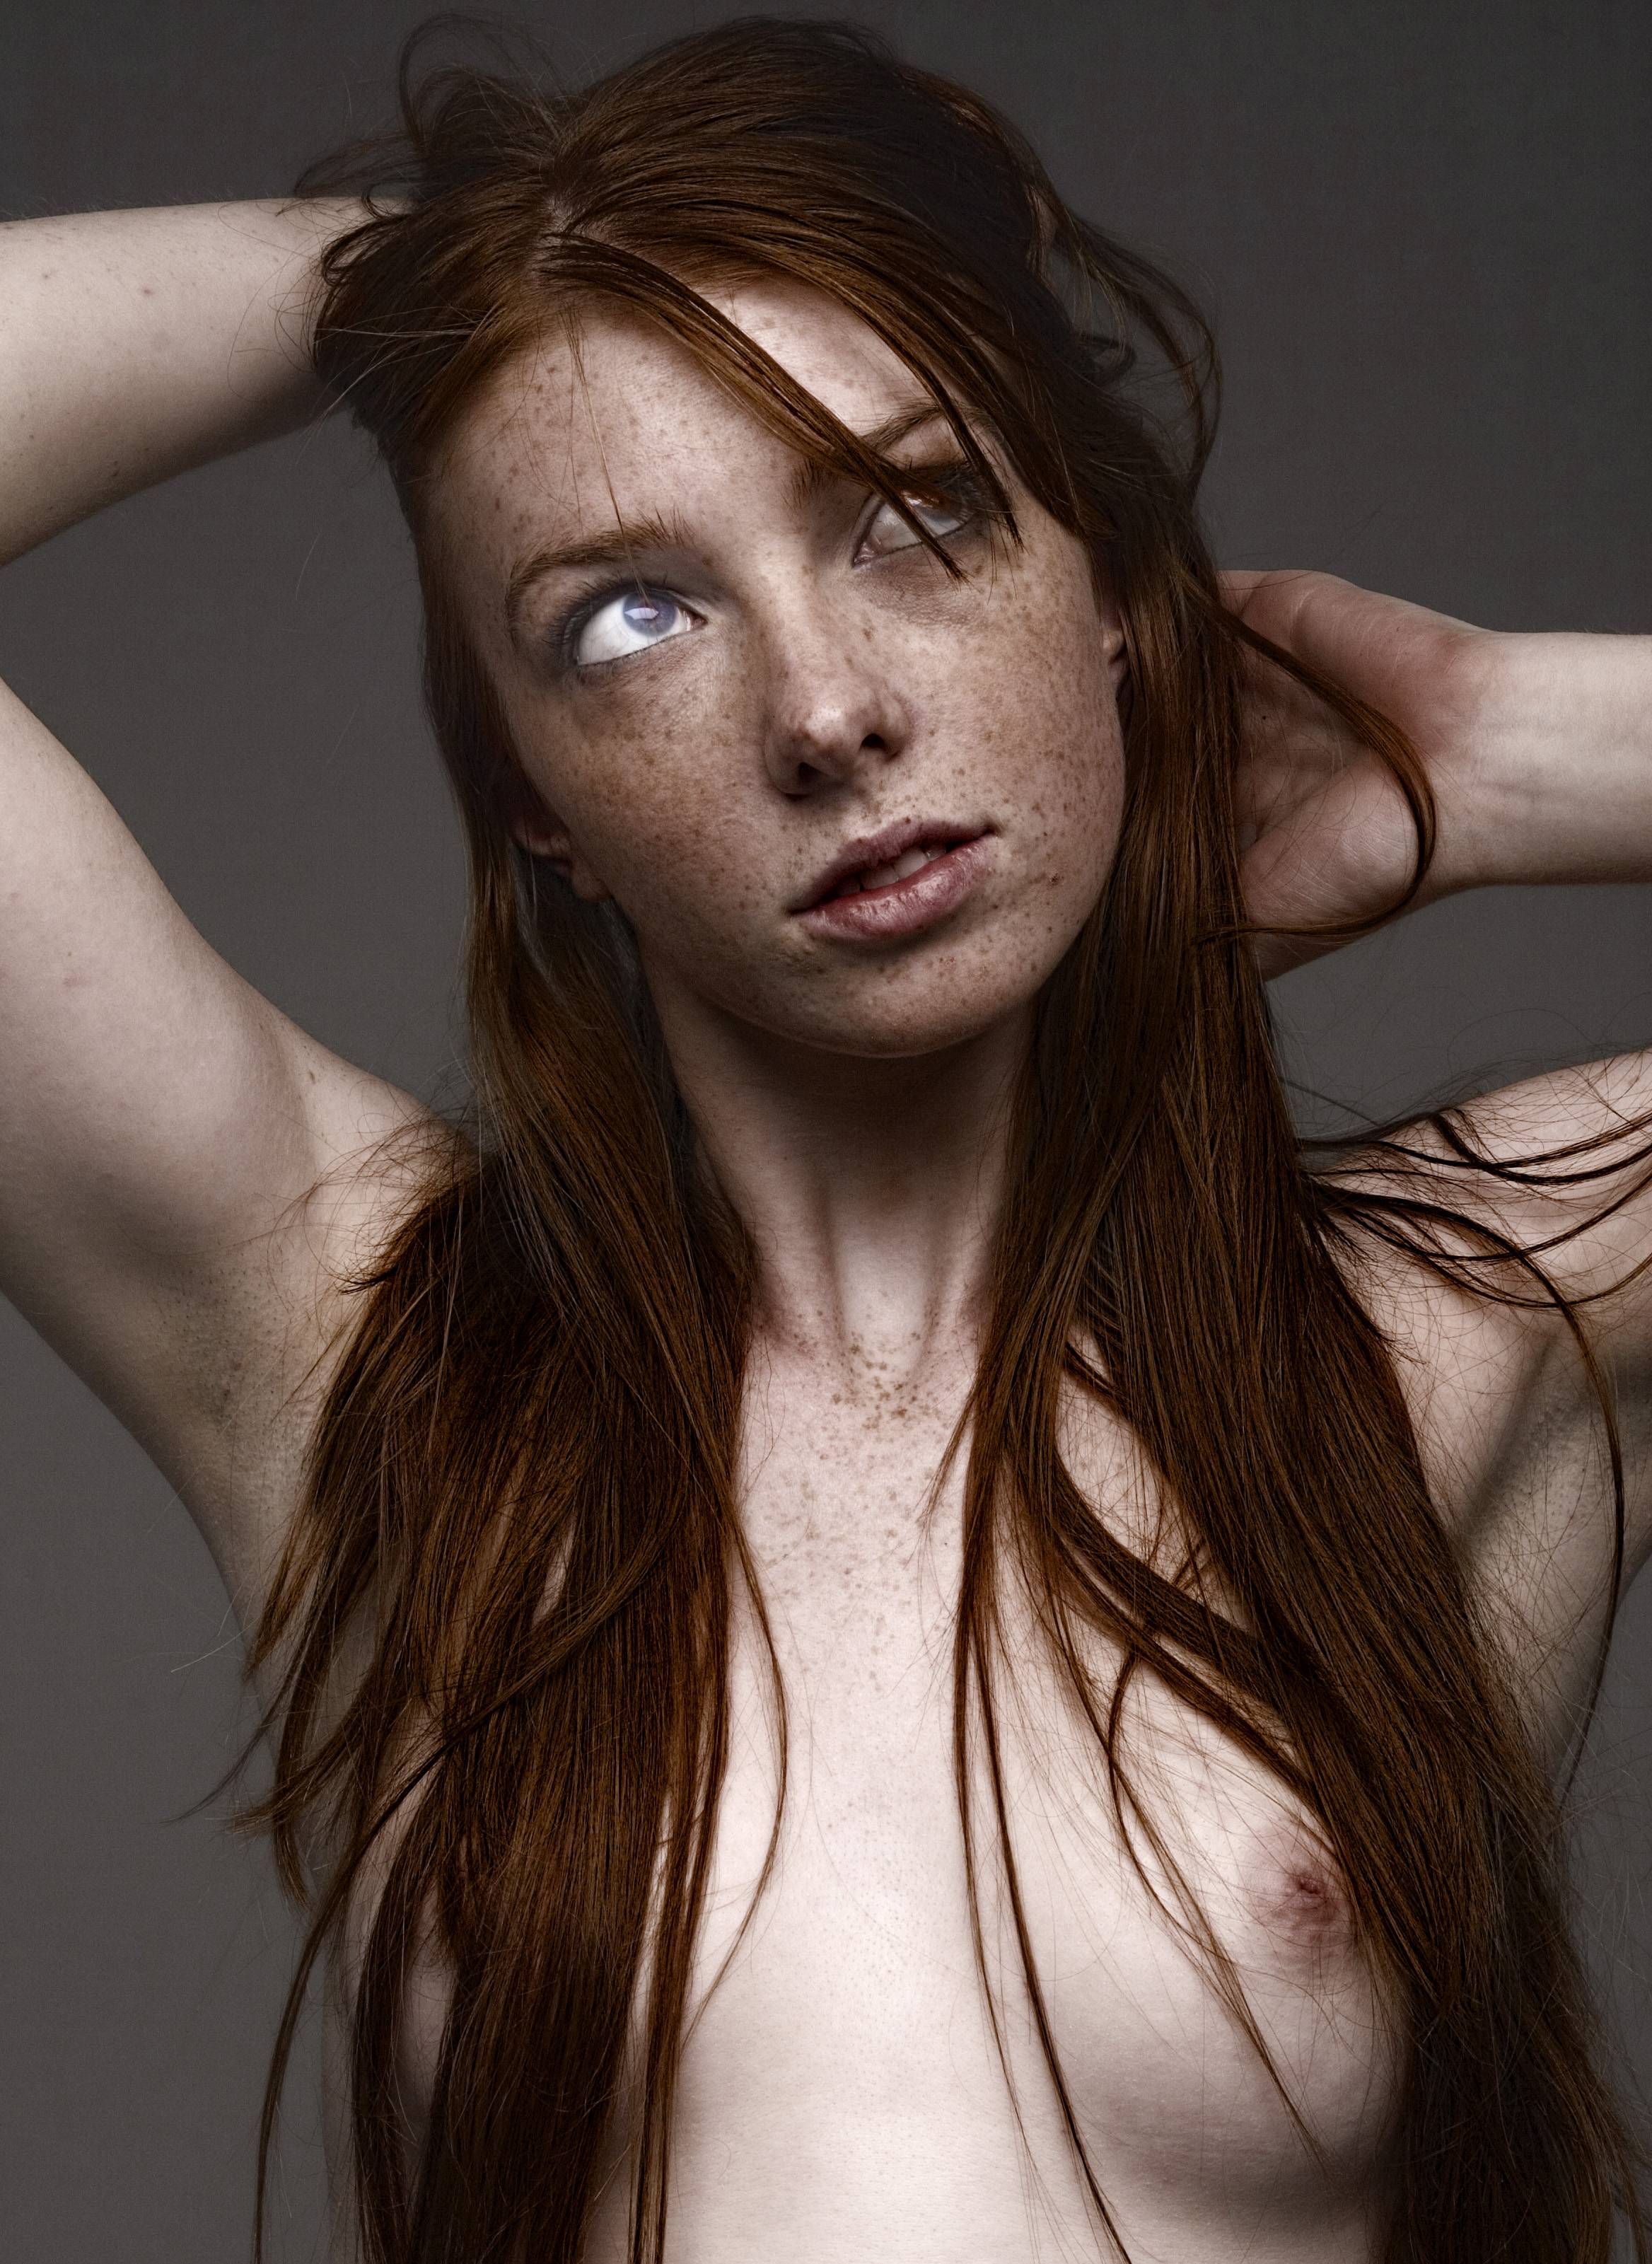 Nude women with freckles - 🧡 Голые девушки с веснушками (74 фото) - Порно ...